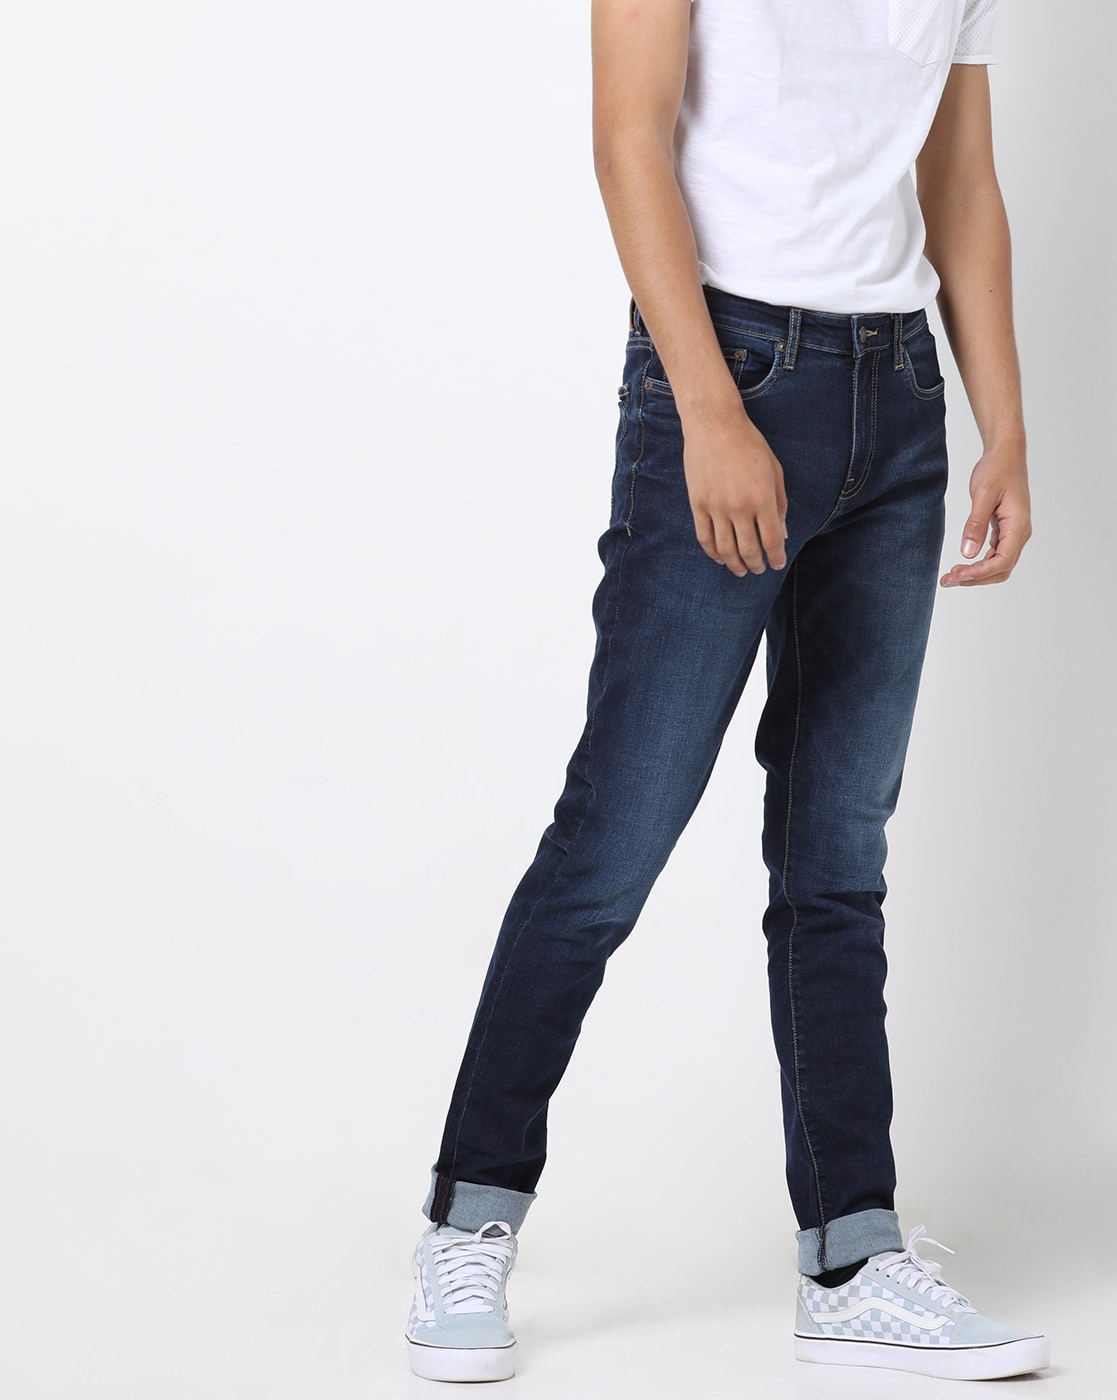 super skinny jeans mens india